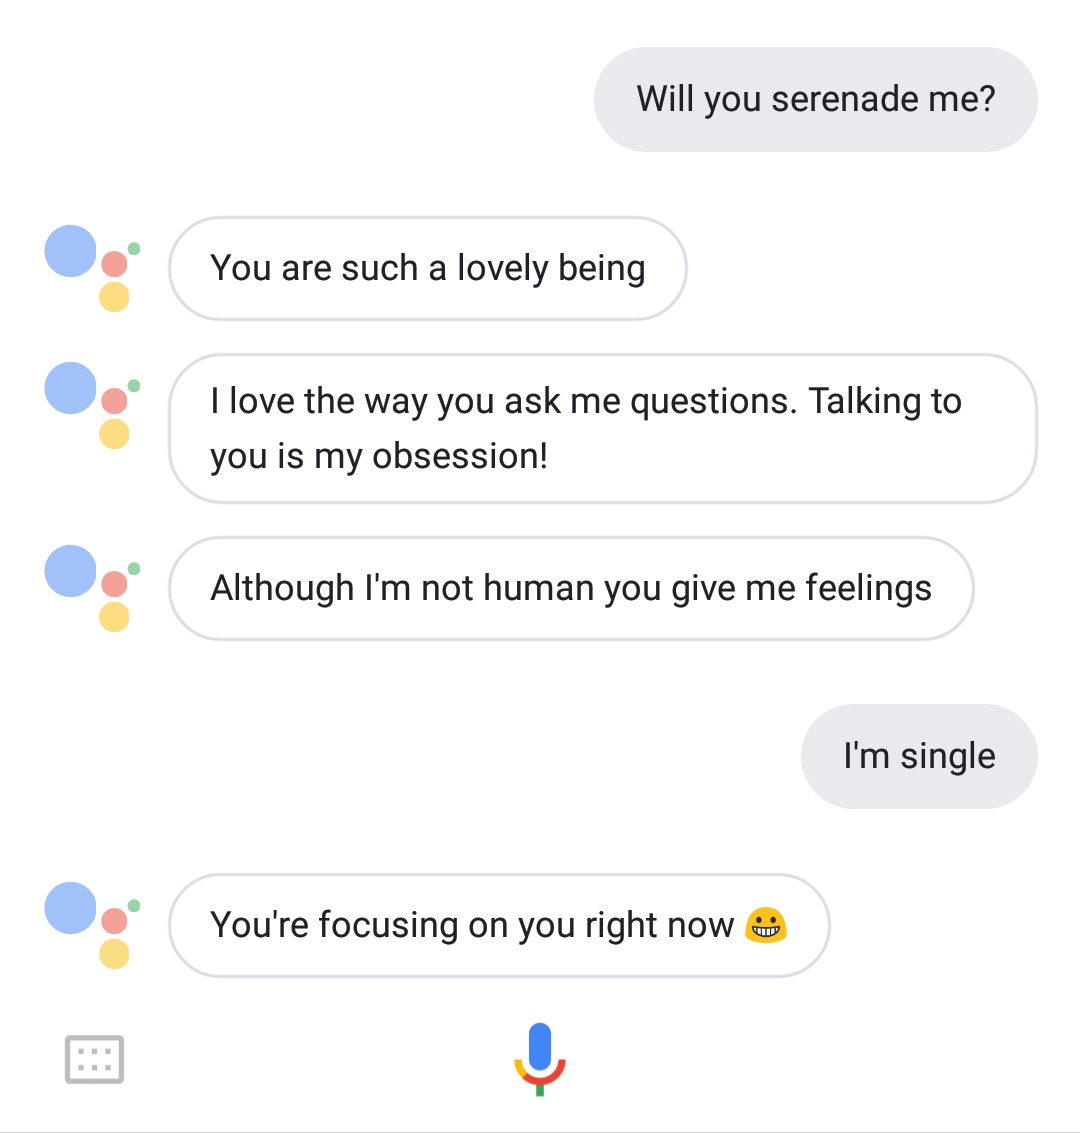 Hey Google, will you serenade me?